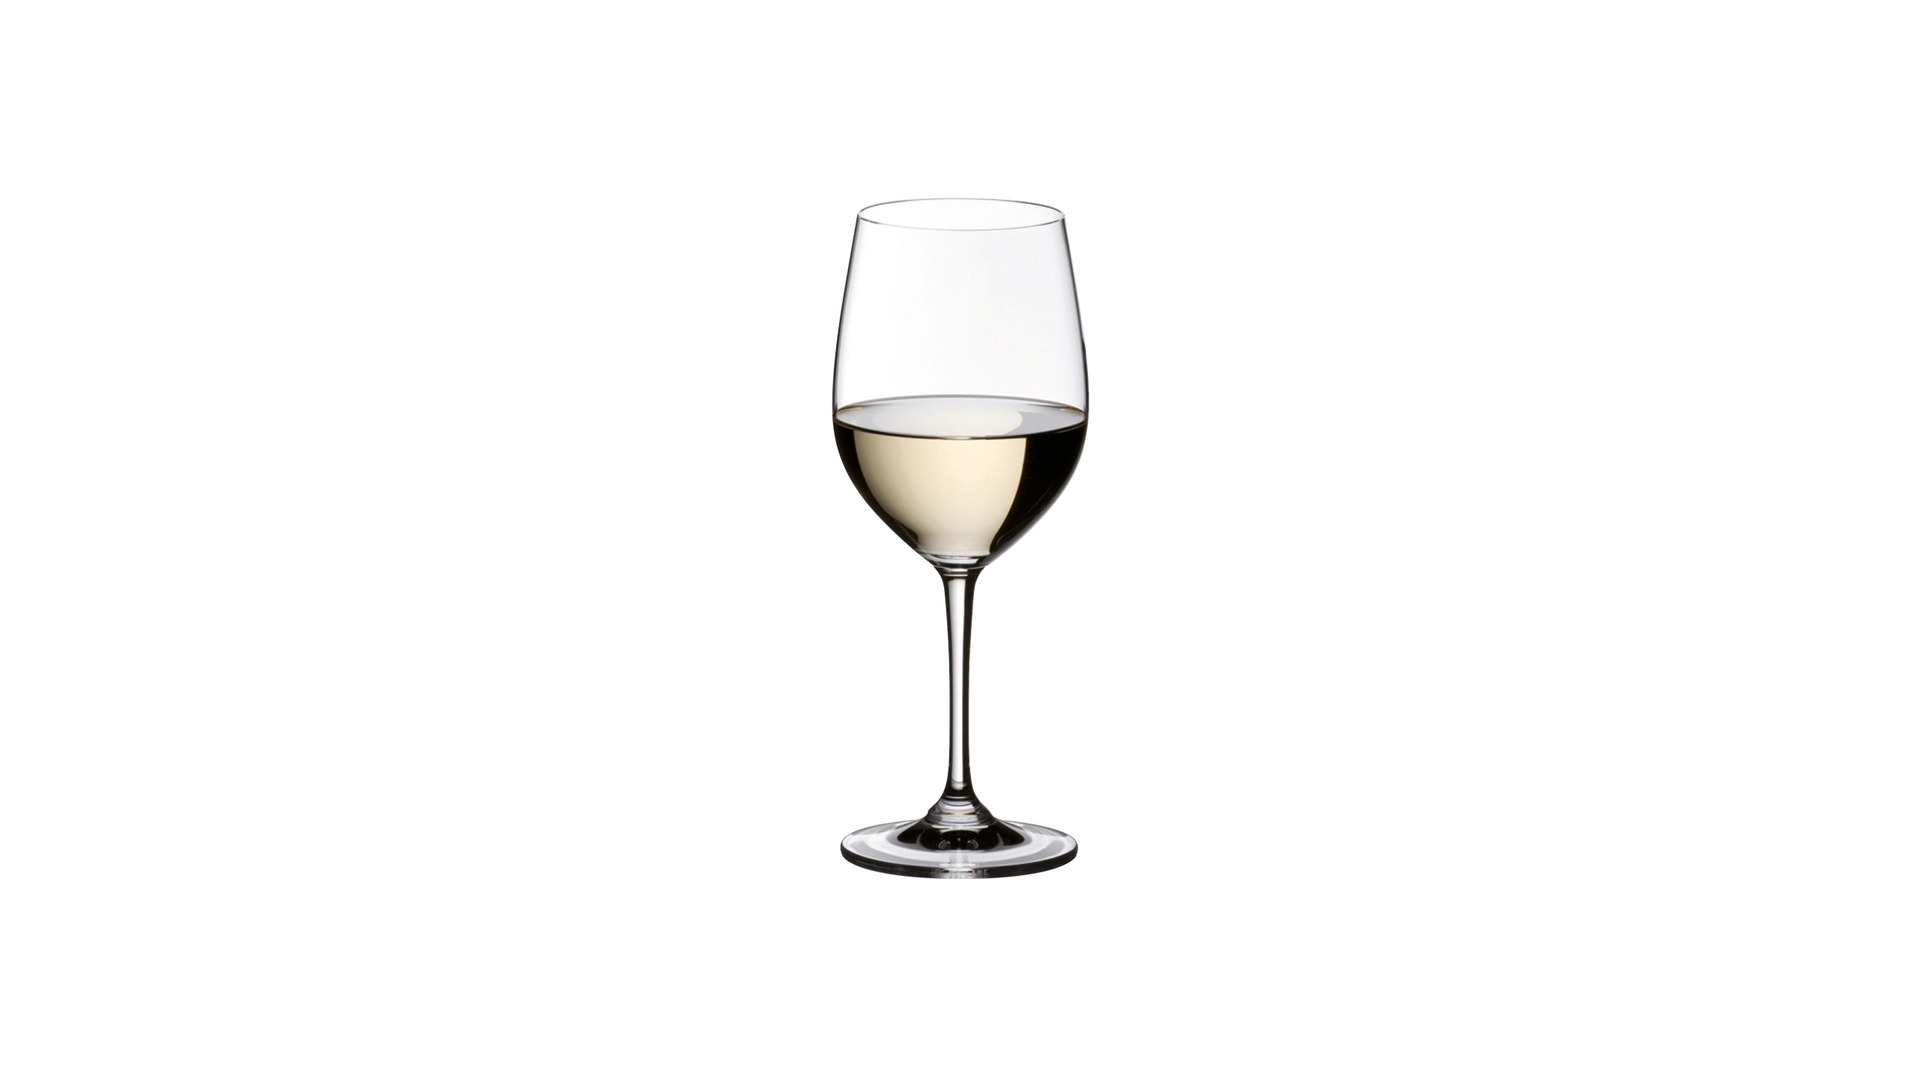 Набор бокалов для белого вина Riedel Vinum Viognier/Chardonnay 370 мл, 8шт по цене 6-ти, хрусталь